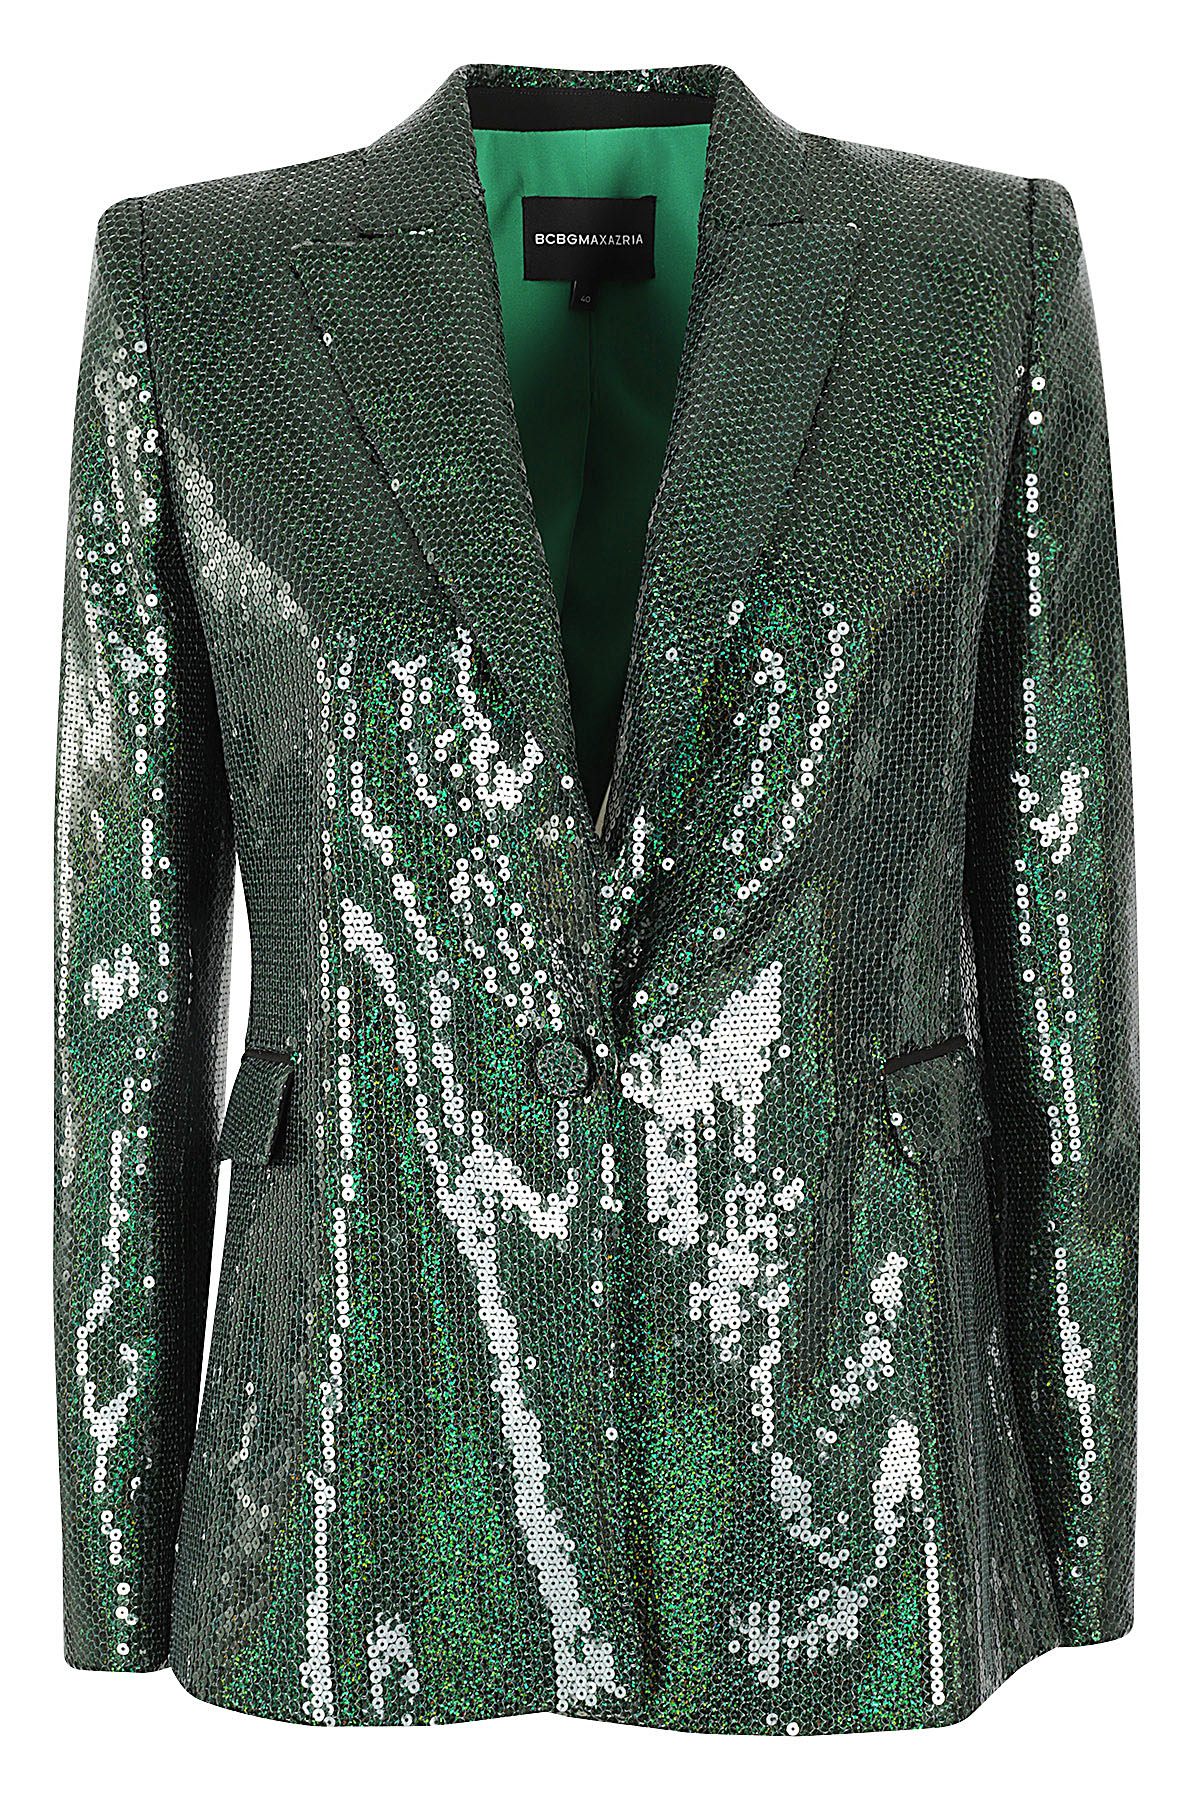 Bcbg Max Azria Jacket In Vf Emerald Green